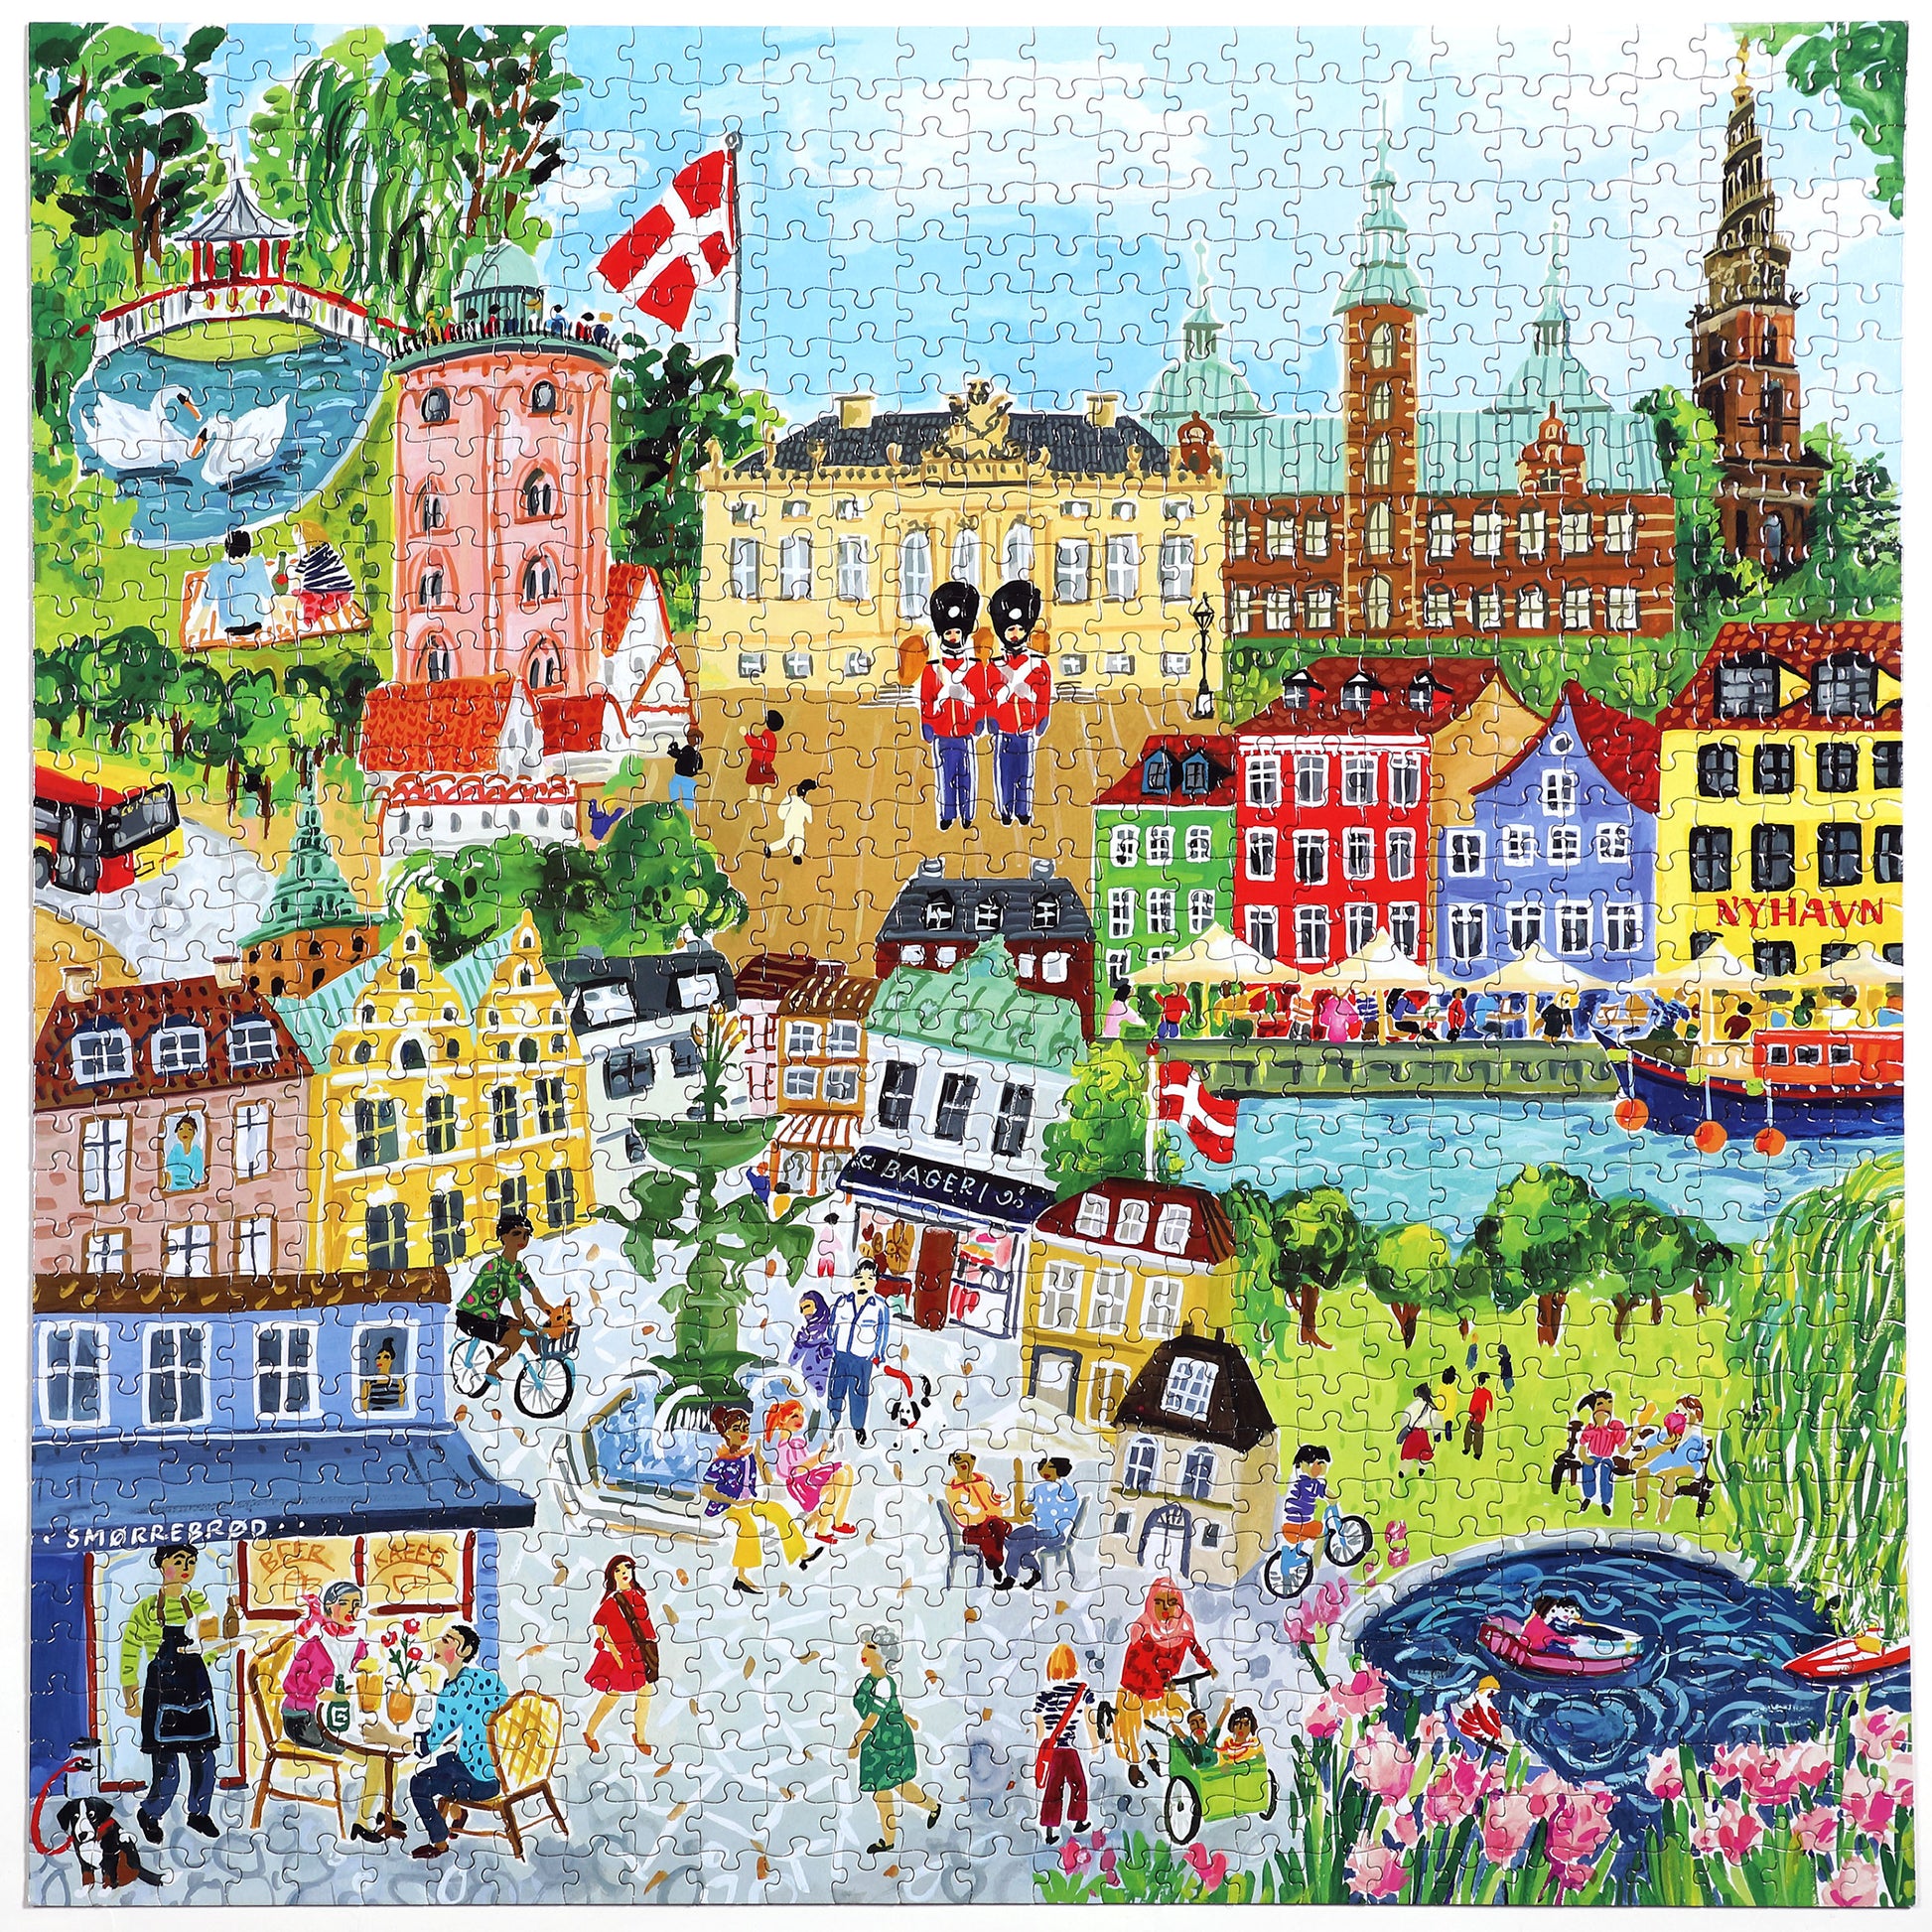 Copenhagen Denmark 1000 Piece Travel Jigsaw Puzzle | eeBoo Piece & Love | Gifts for Travel Lovers